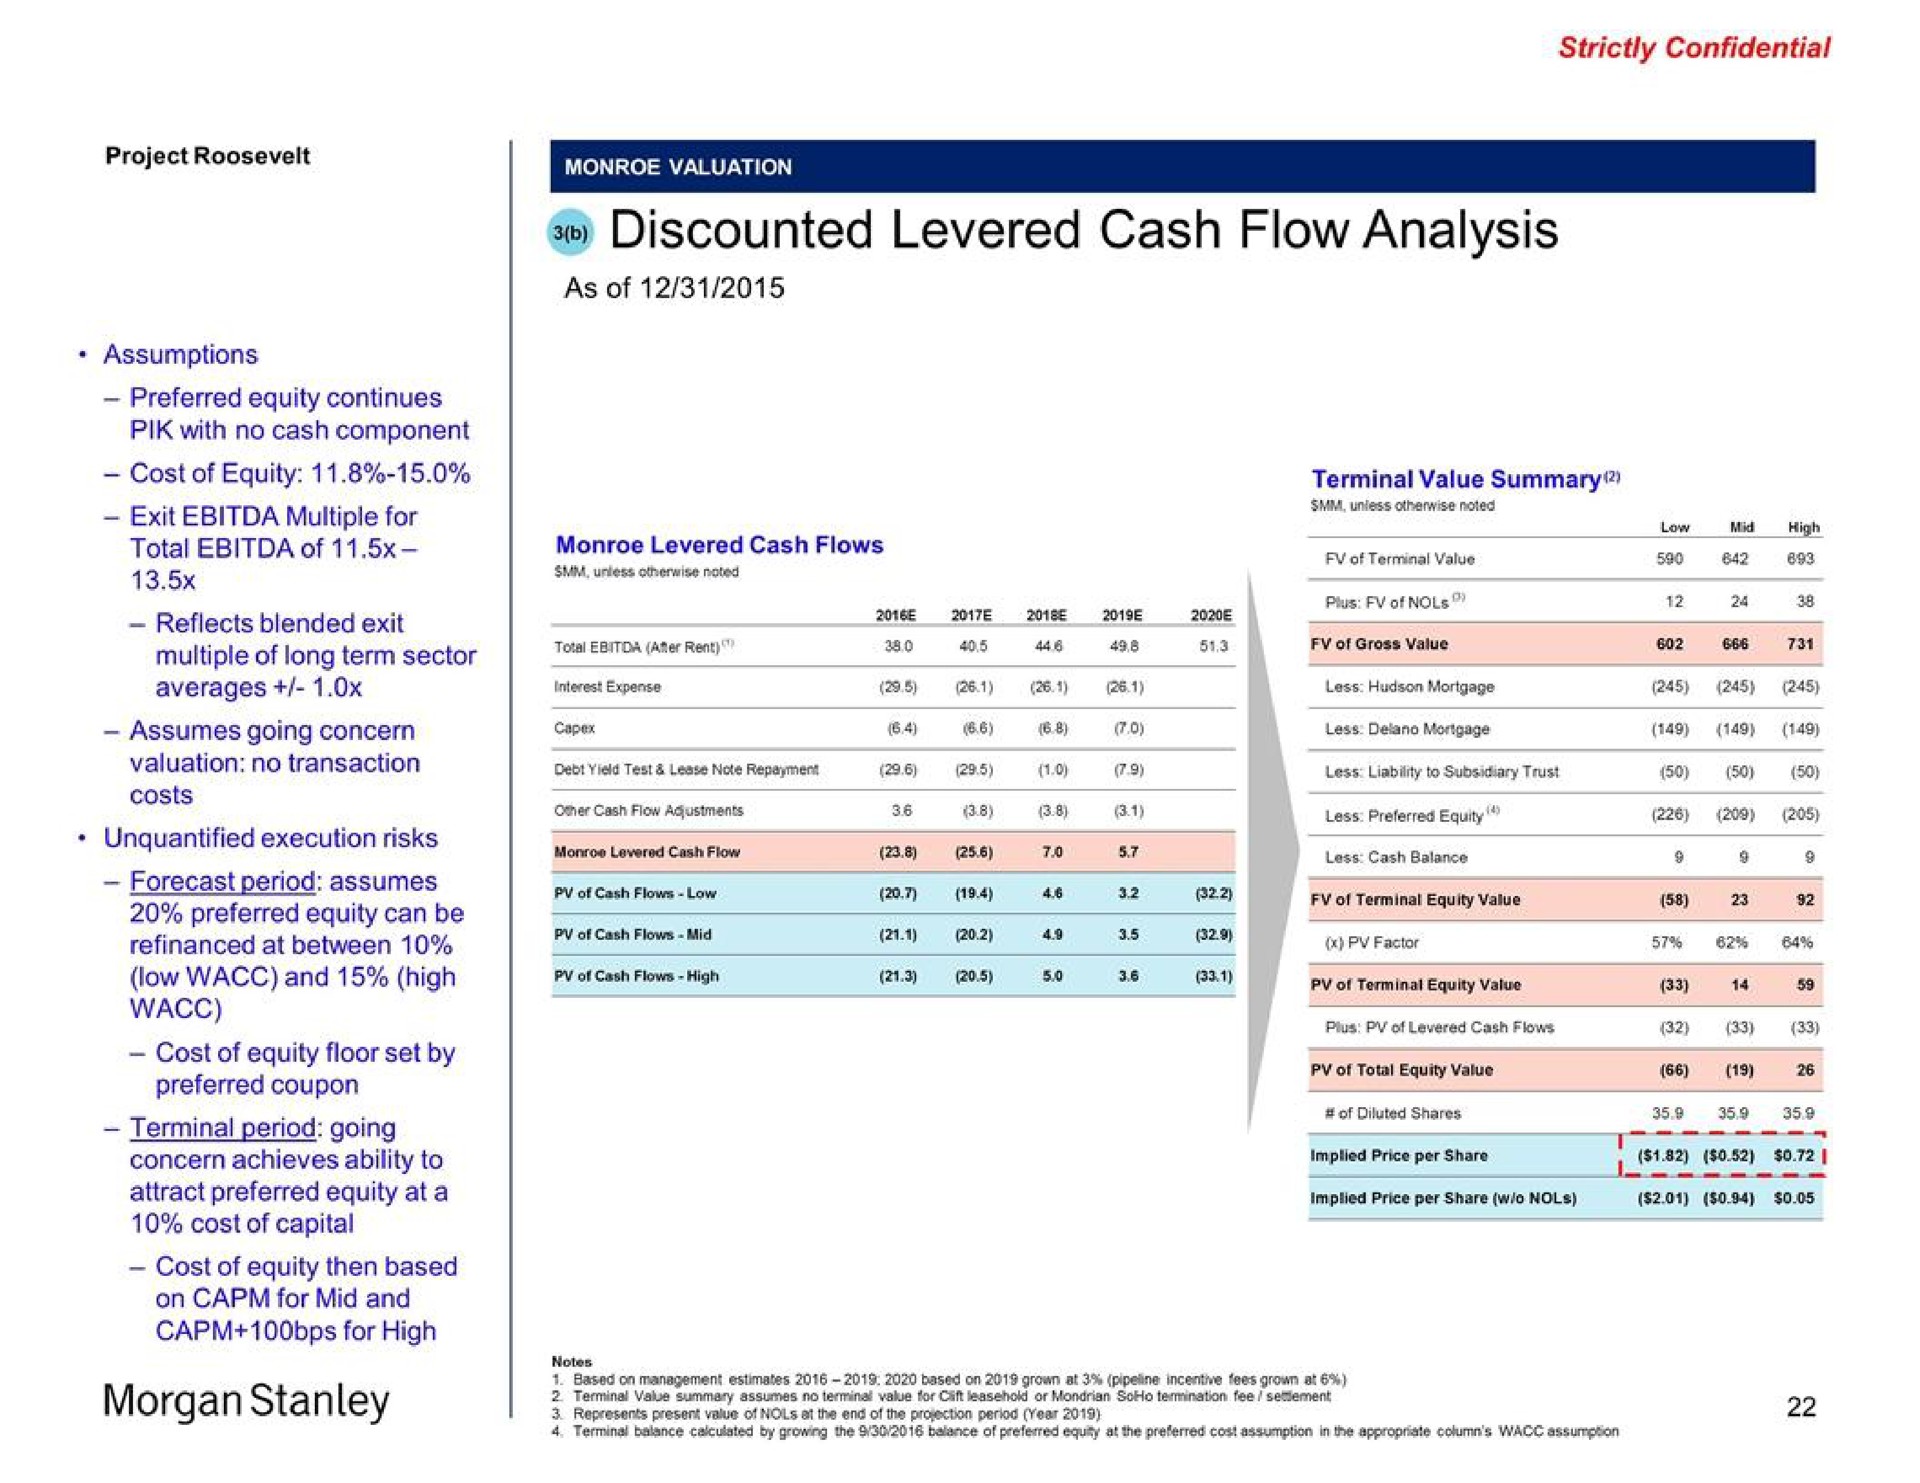 discounted levered cash flow analysis morgan | Morgan Stanley